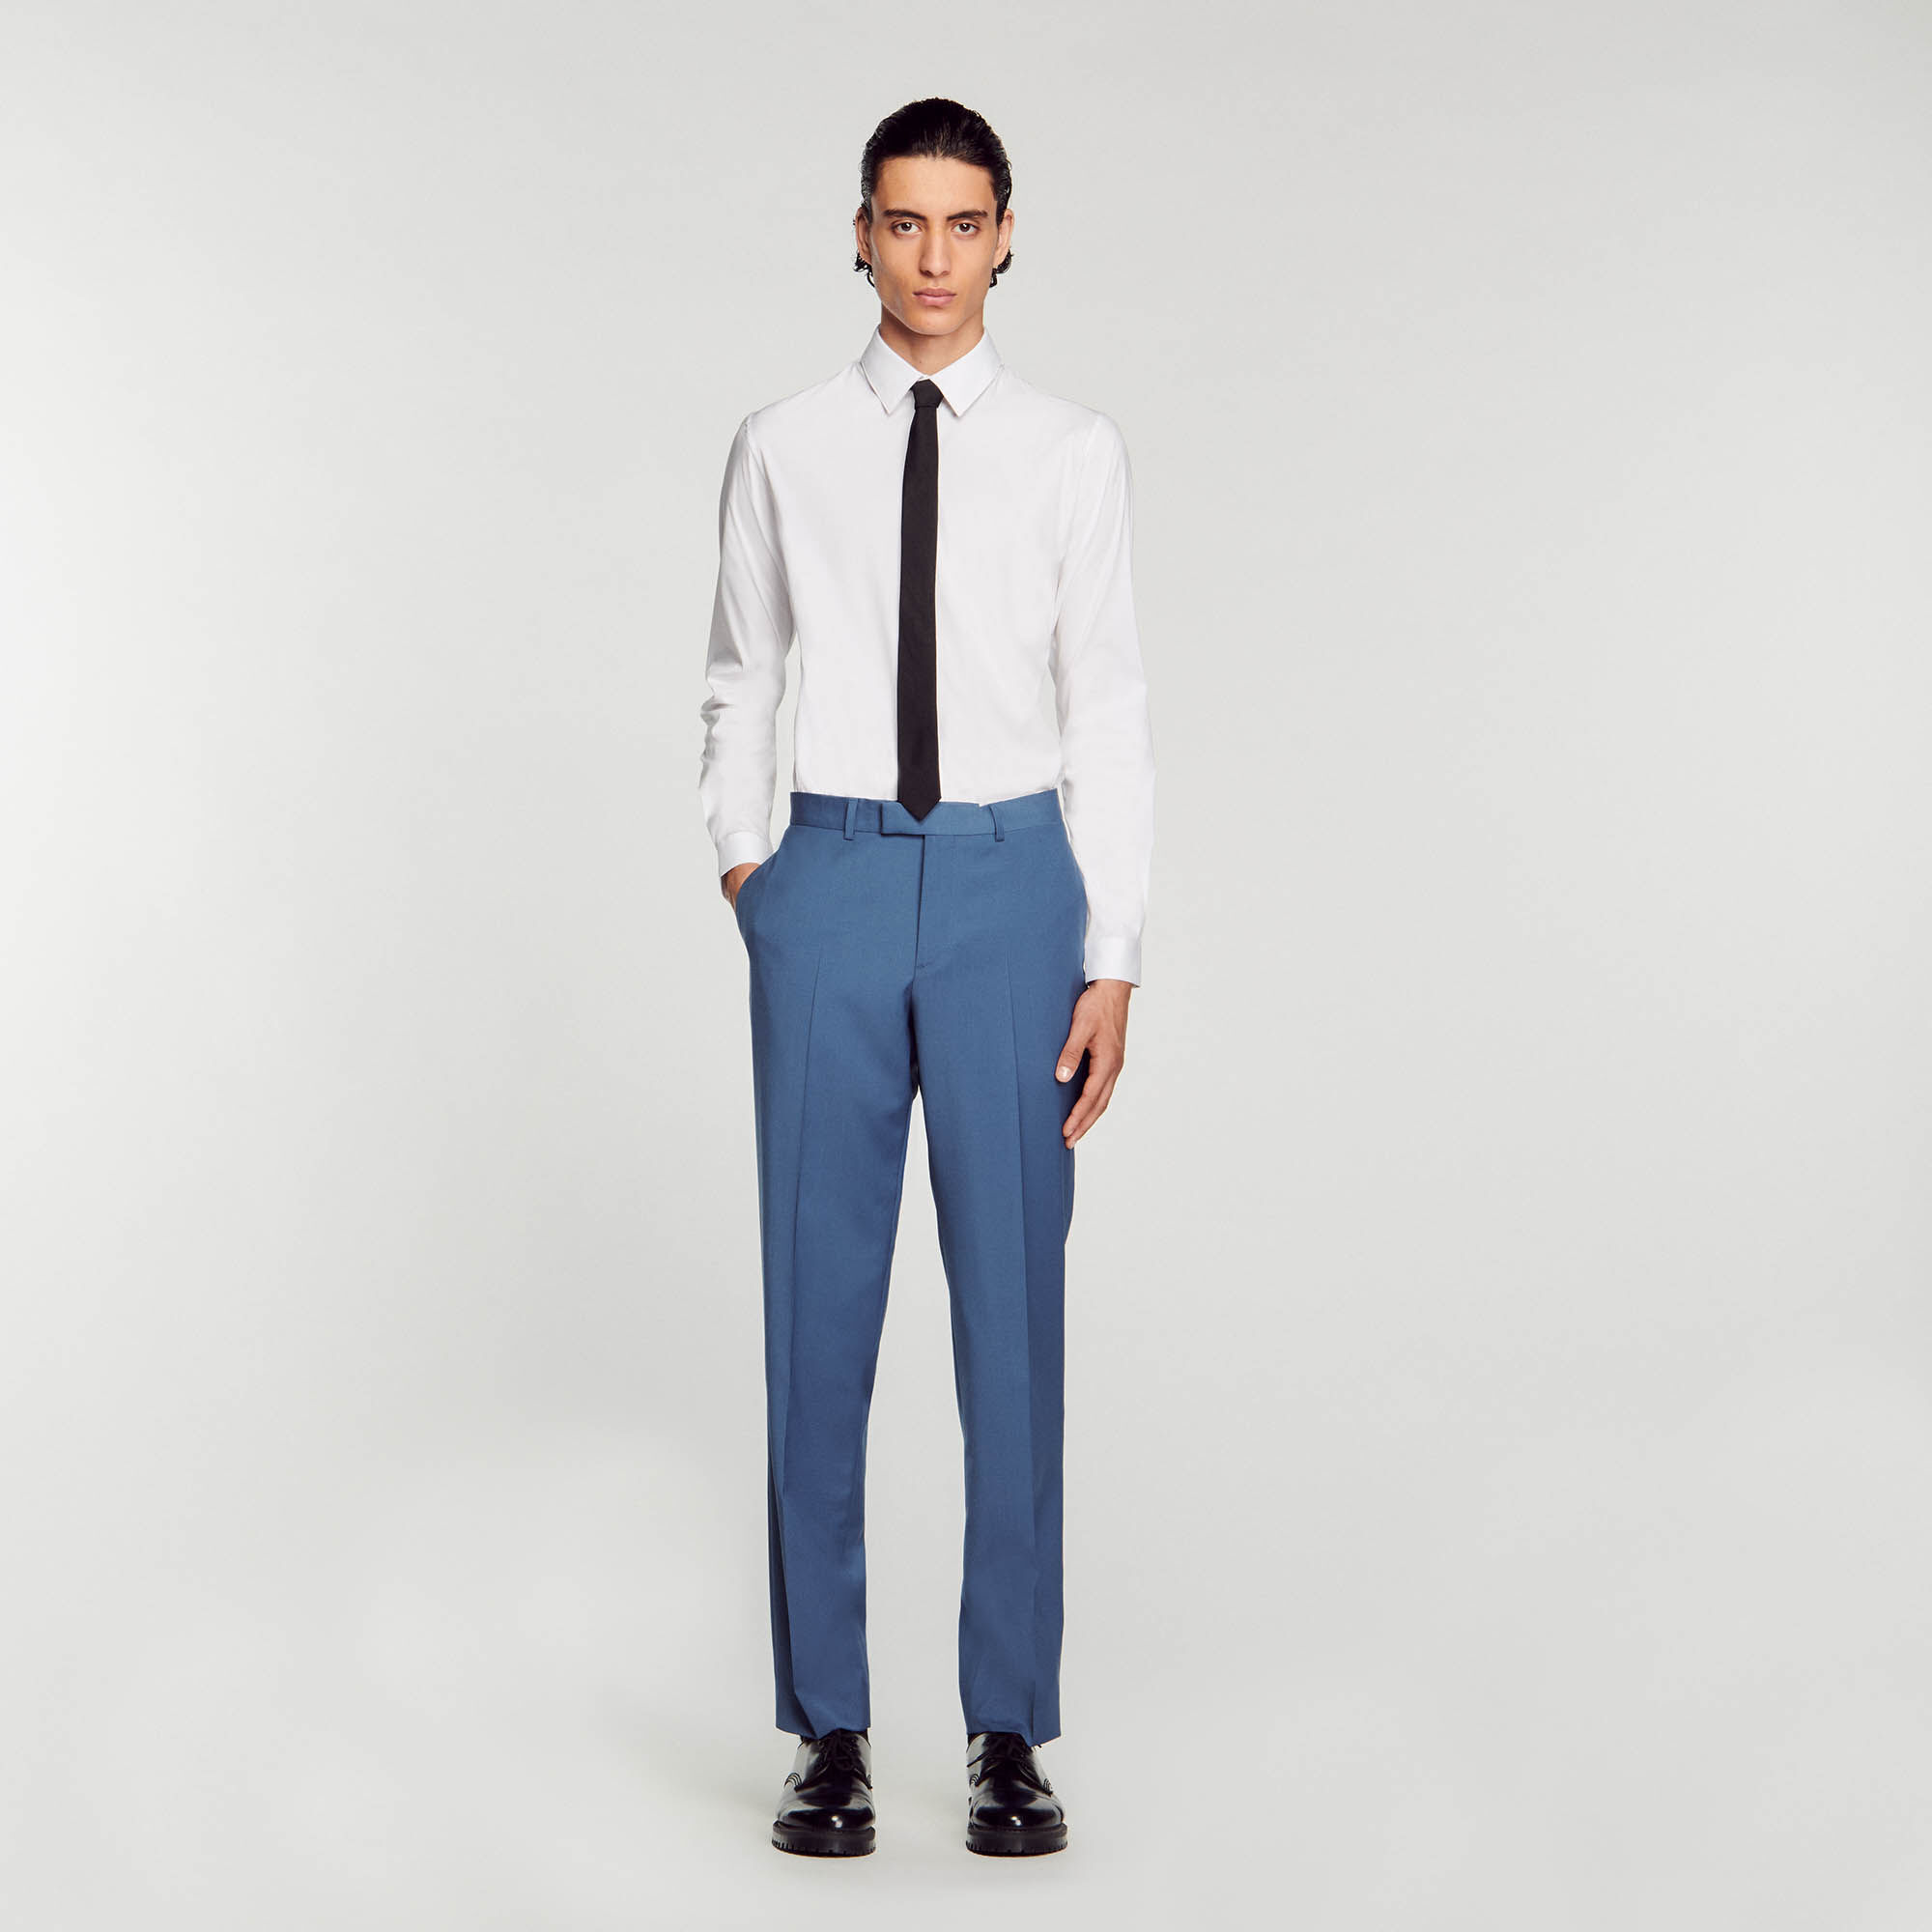 Men's Blue Suiting and Casual Pants - Shop Online